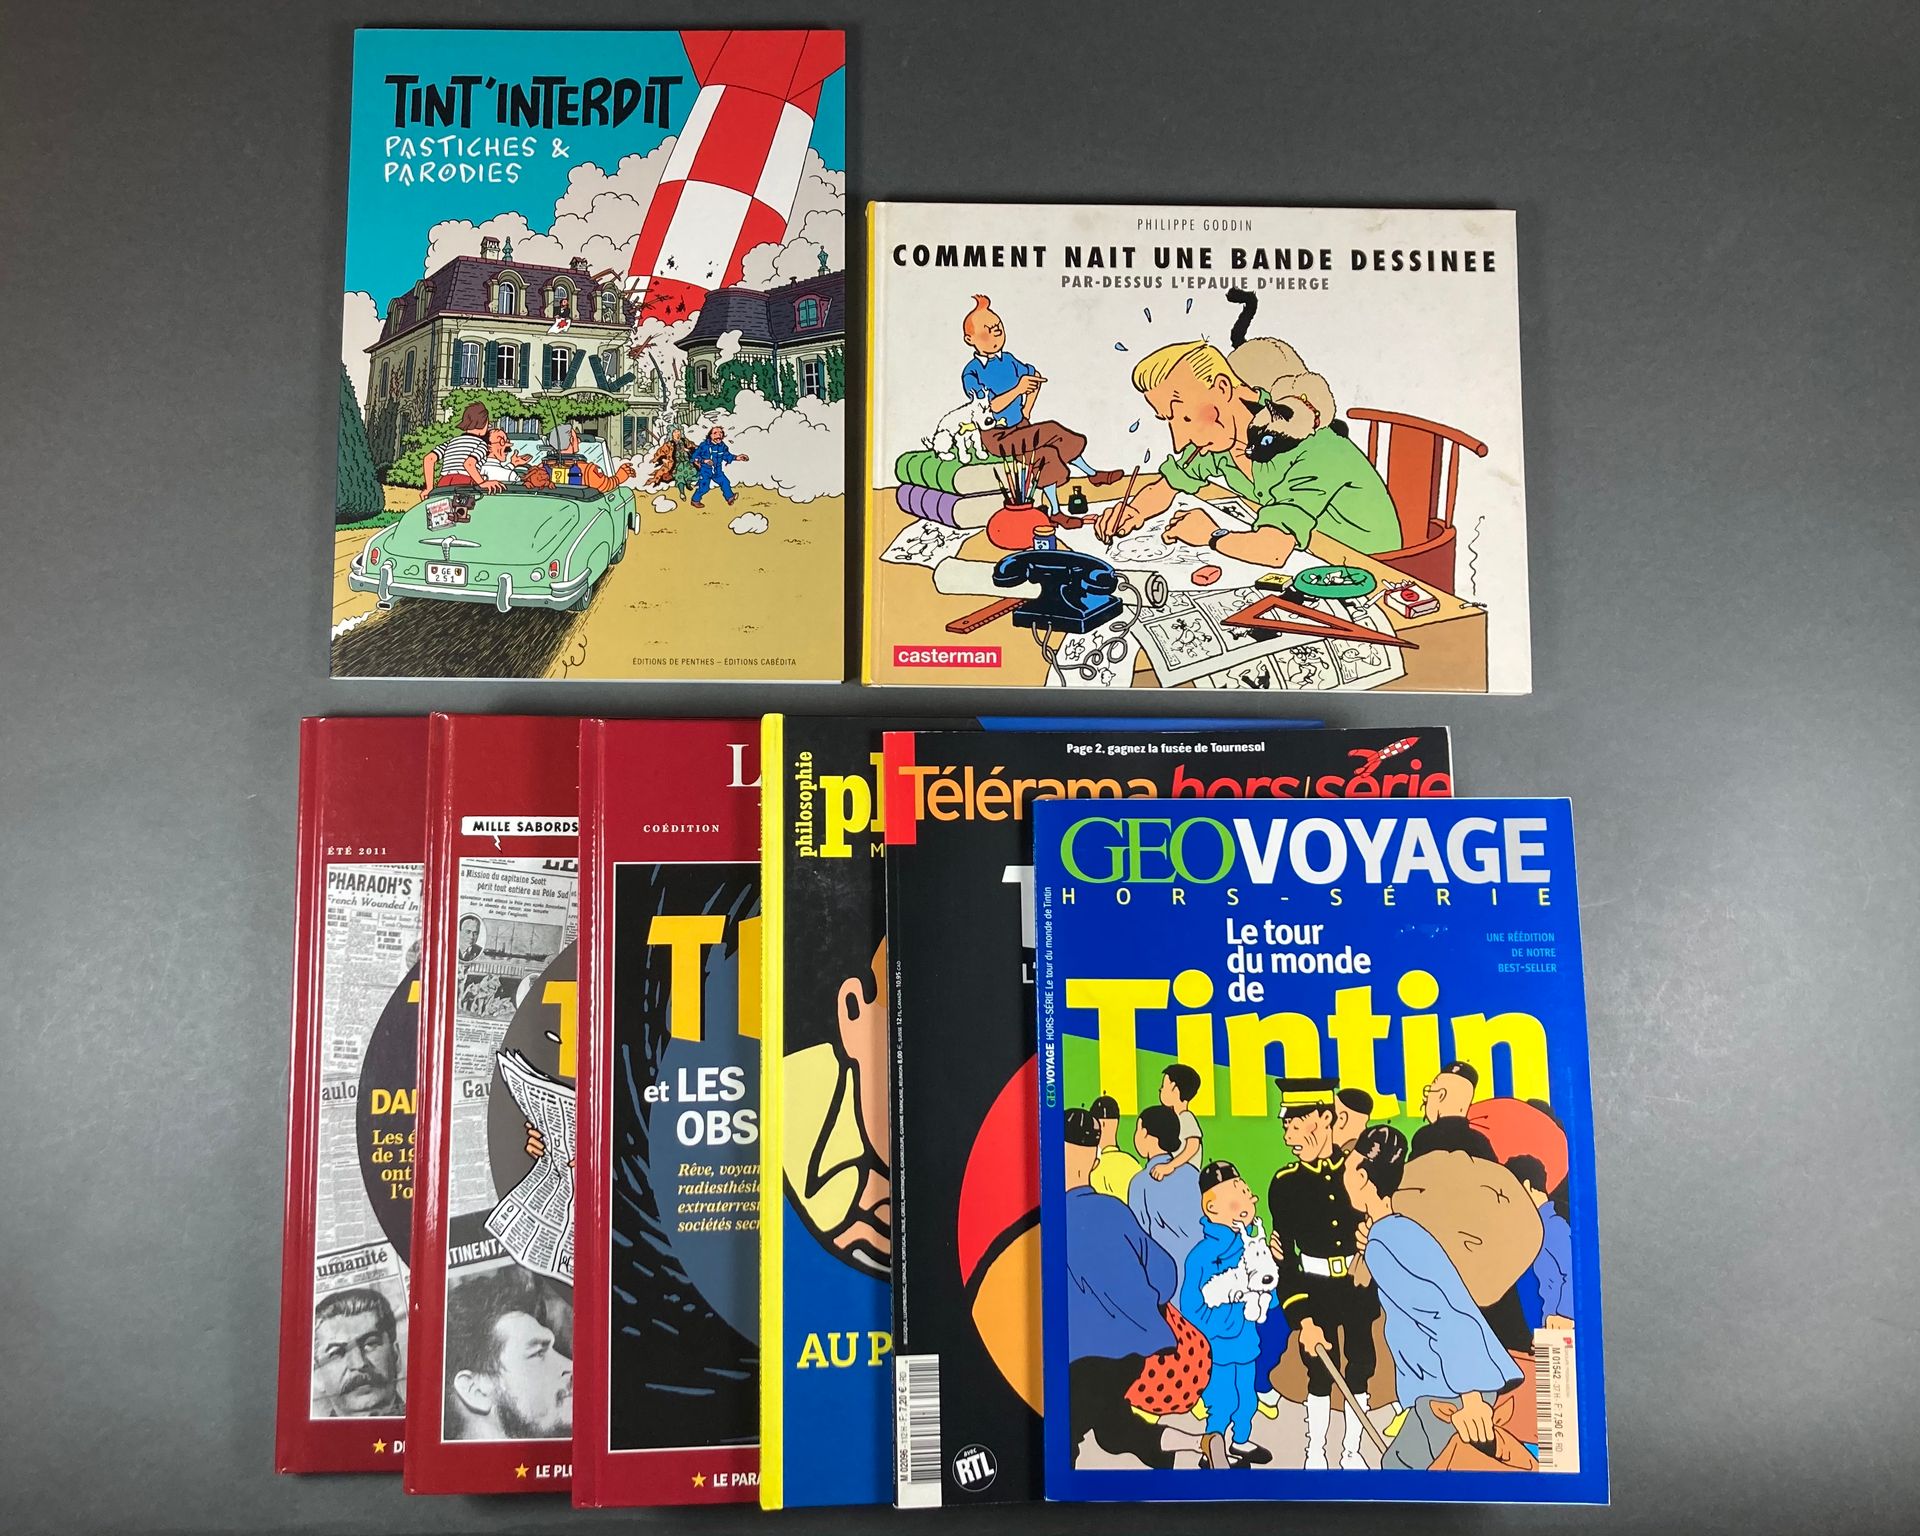 Hergé - Tintin 来自AJ Tornare, Tint'interdit, Pastiches et parodies, 应Moulinsart的要&hellip;